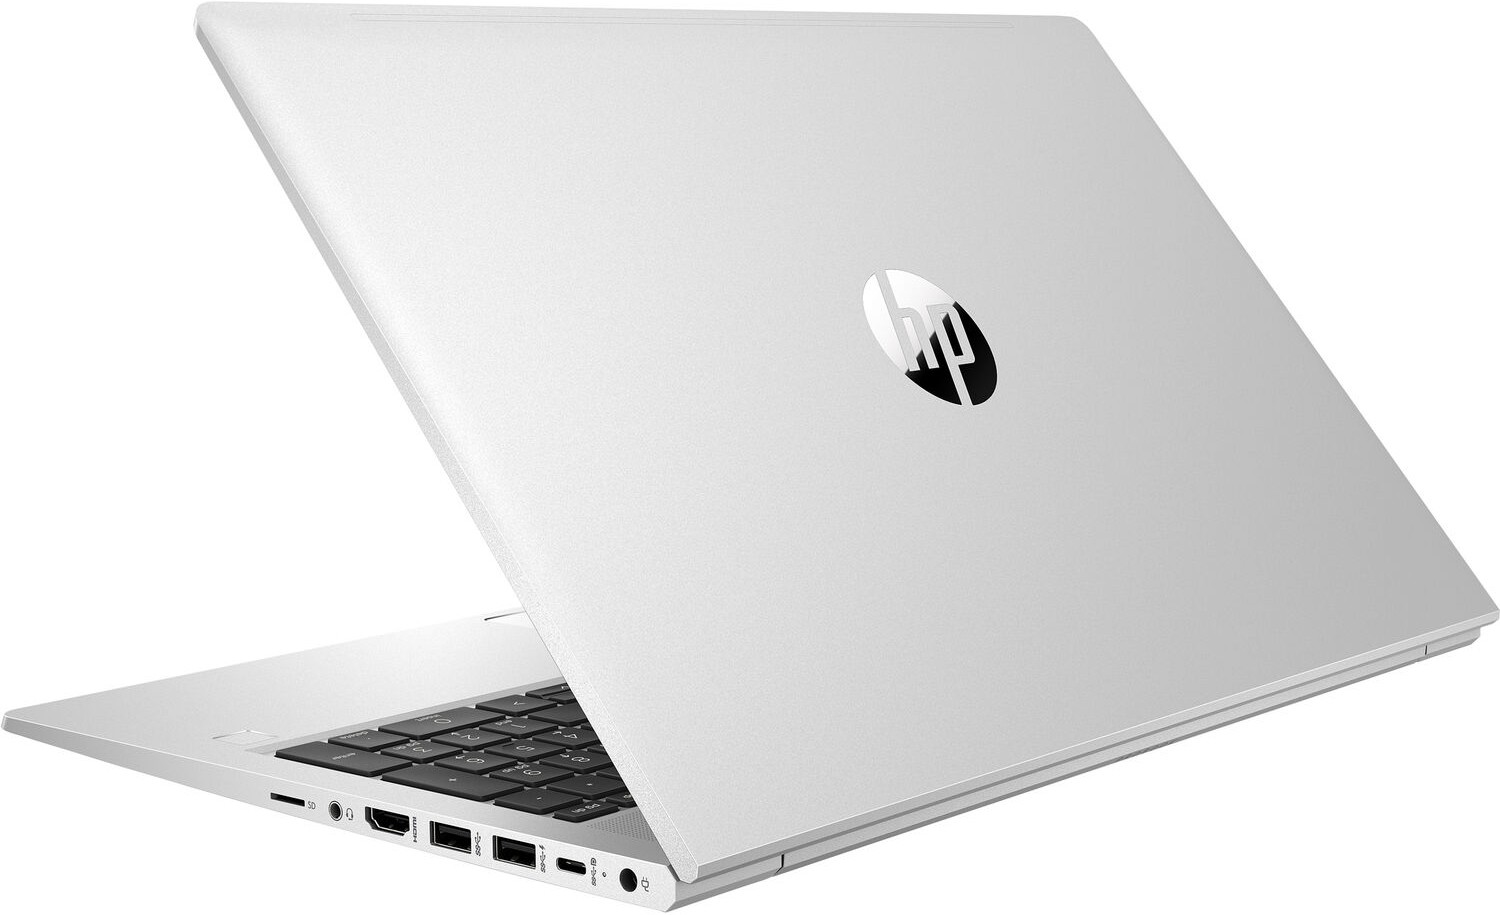 Ноутбук HP ProBook 450 G8 Core i7-1165G7 2.8GHz 15.6" FHD (1920x1080) AG,8Gb DDR4(1),512Gb SSD,45Wh LL,Backlit,FPR,1.8kg,1y,Silver,Win10Pro-39434